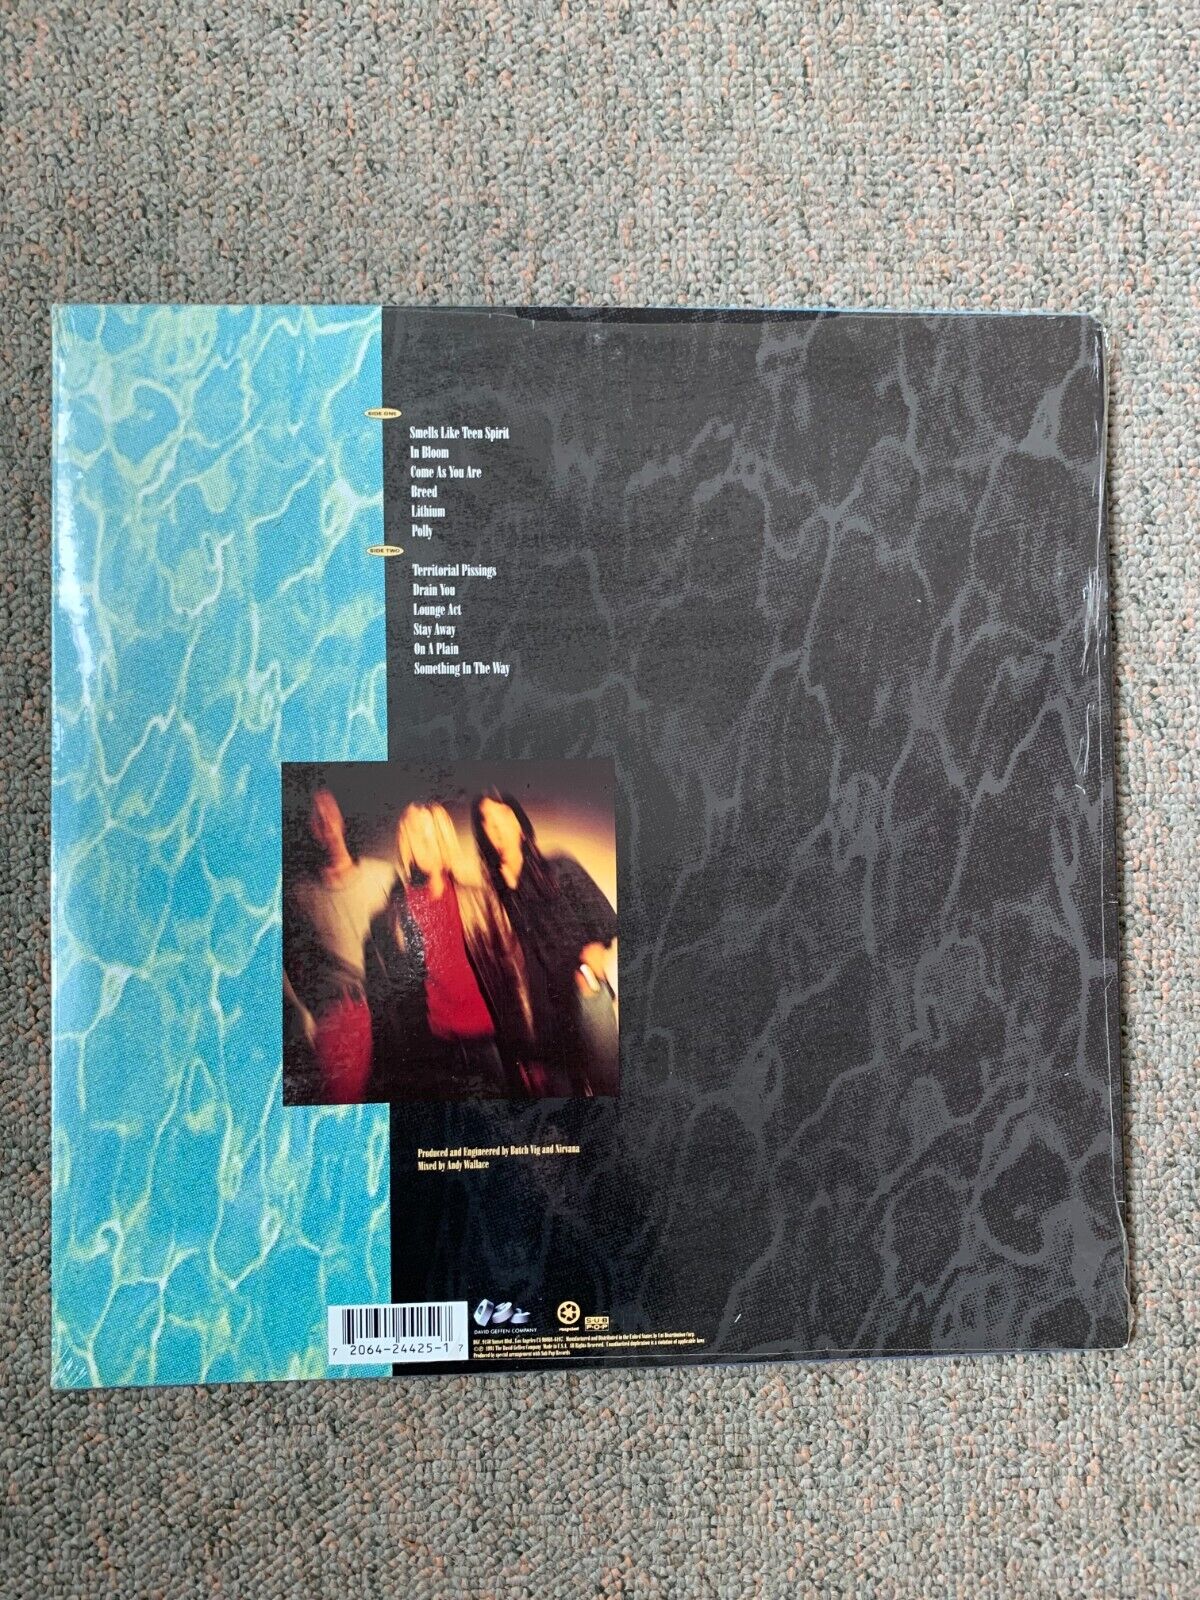 Pic 1 NIRVANA NEVERMIND SEALED 1991 1st US PRESSING VINYL LP